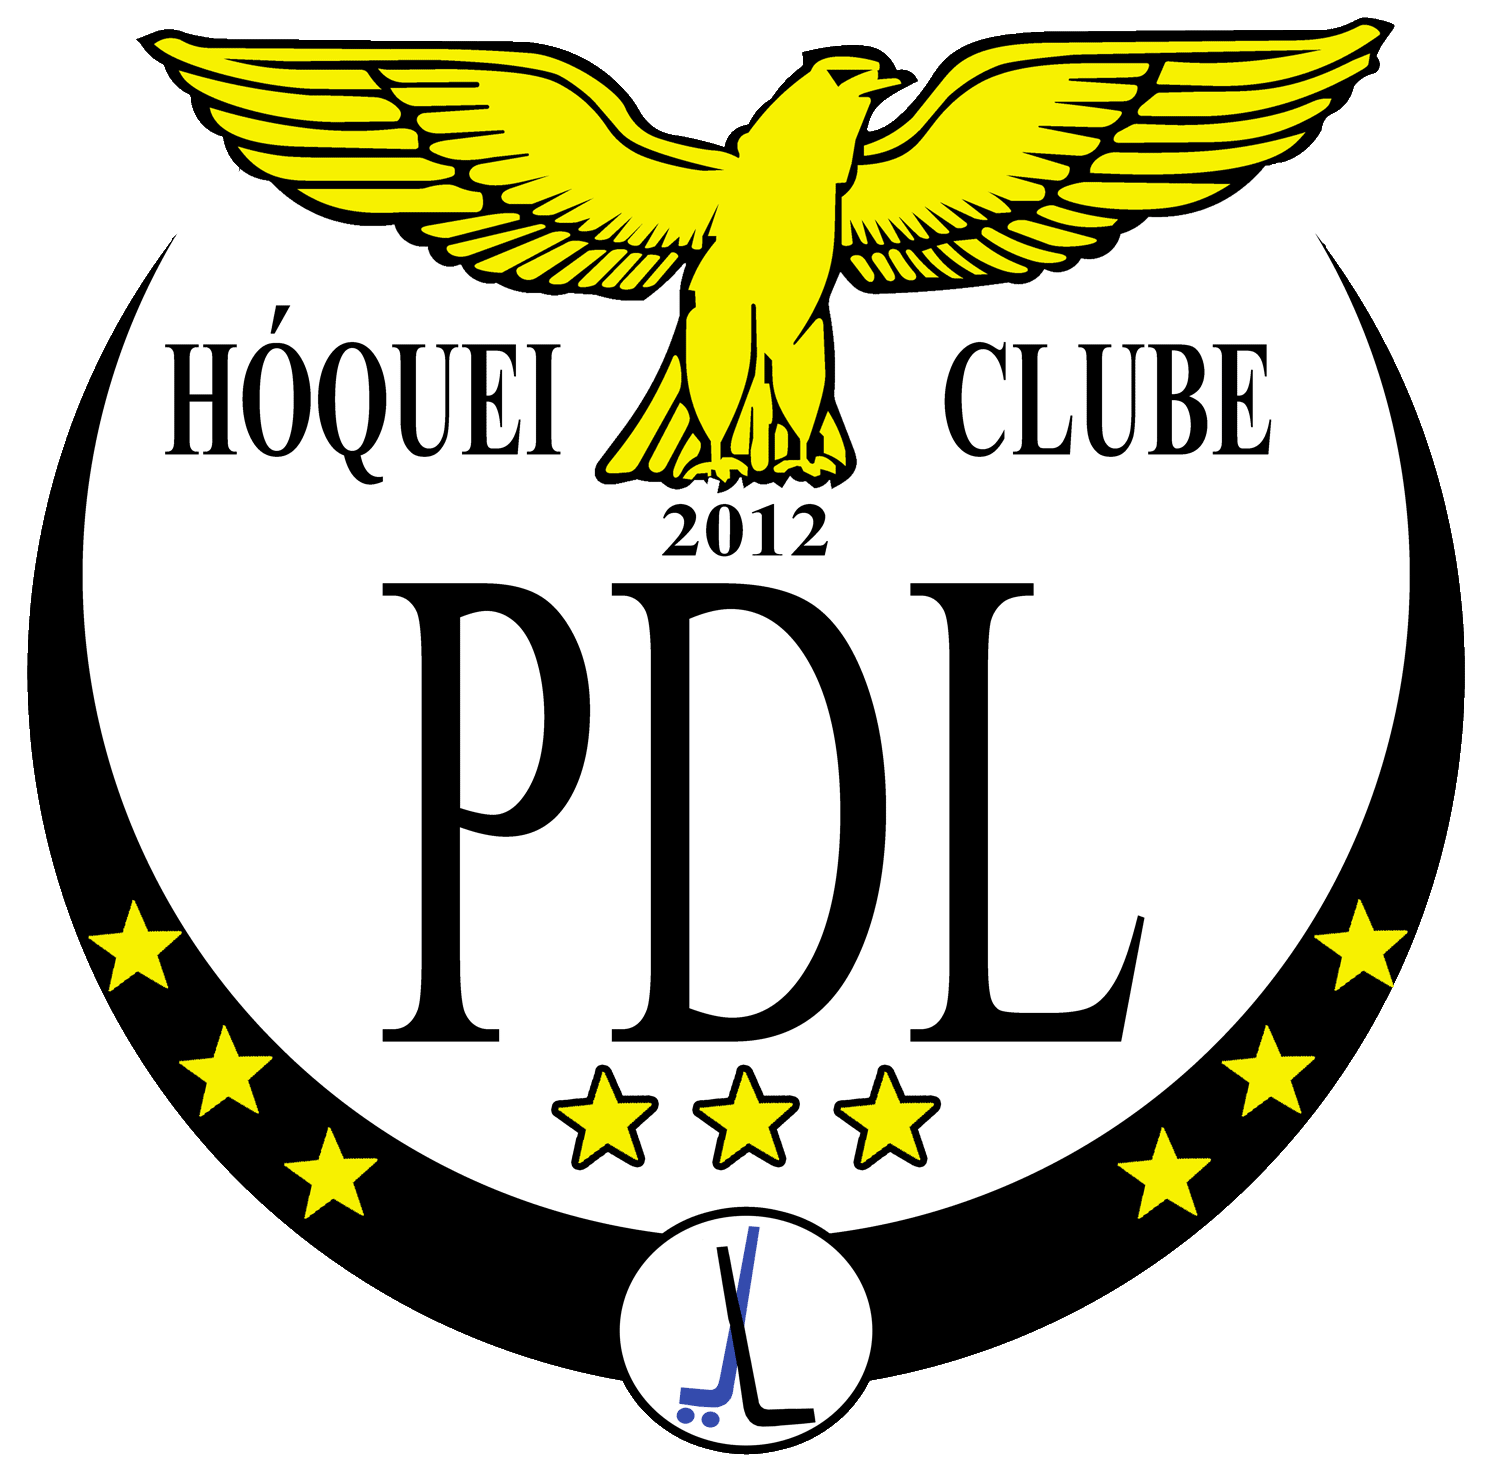 Hóquei Clube PDL 'B'